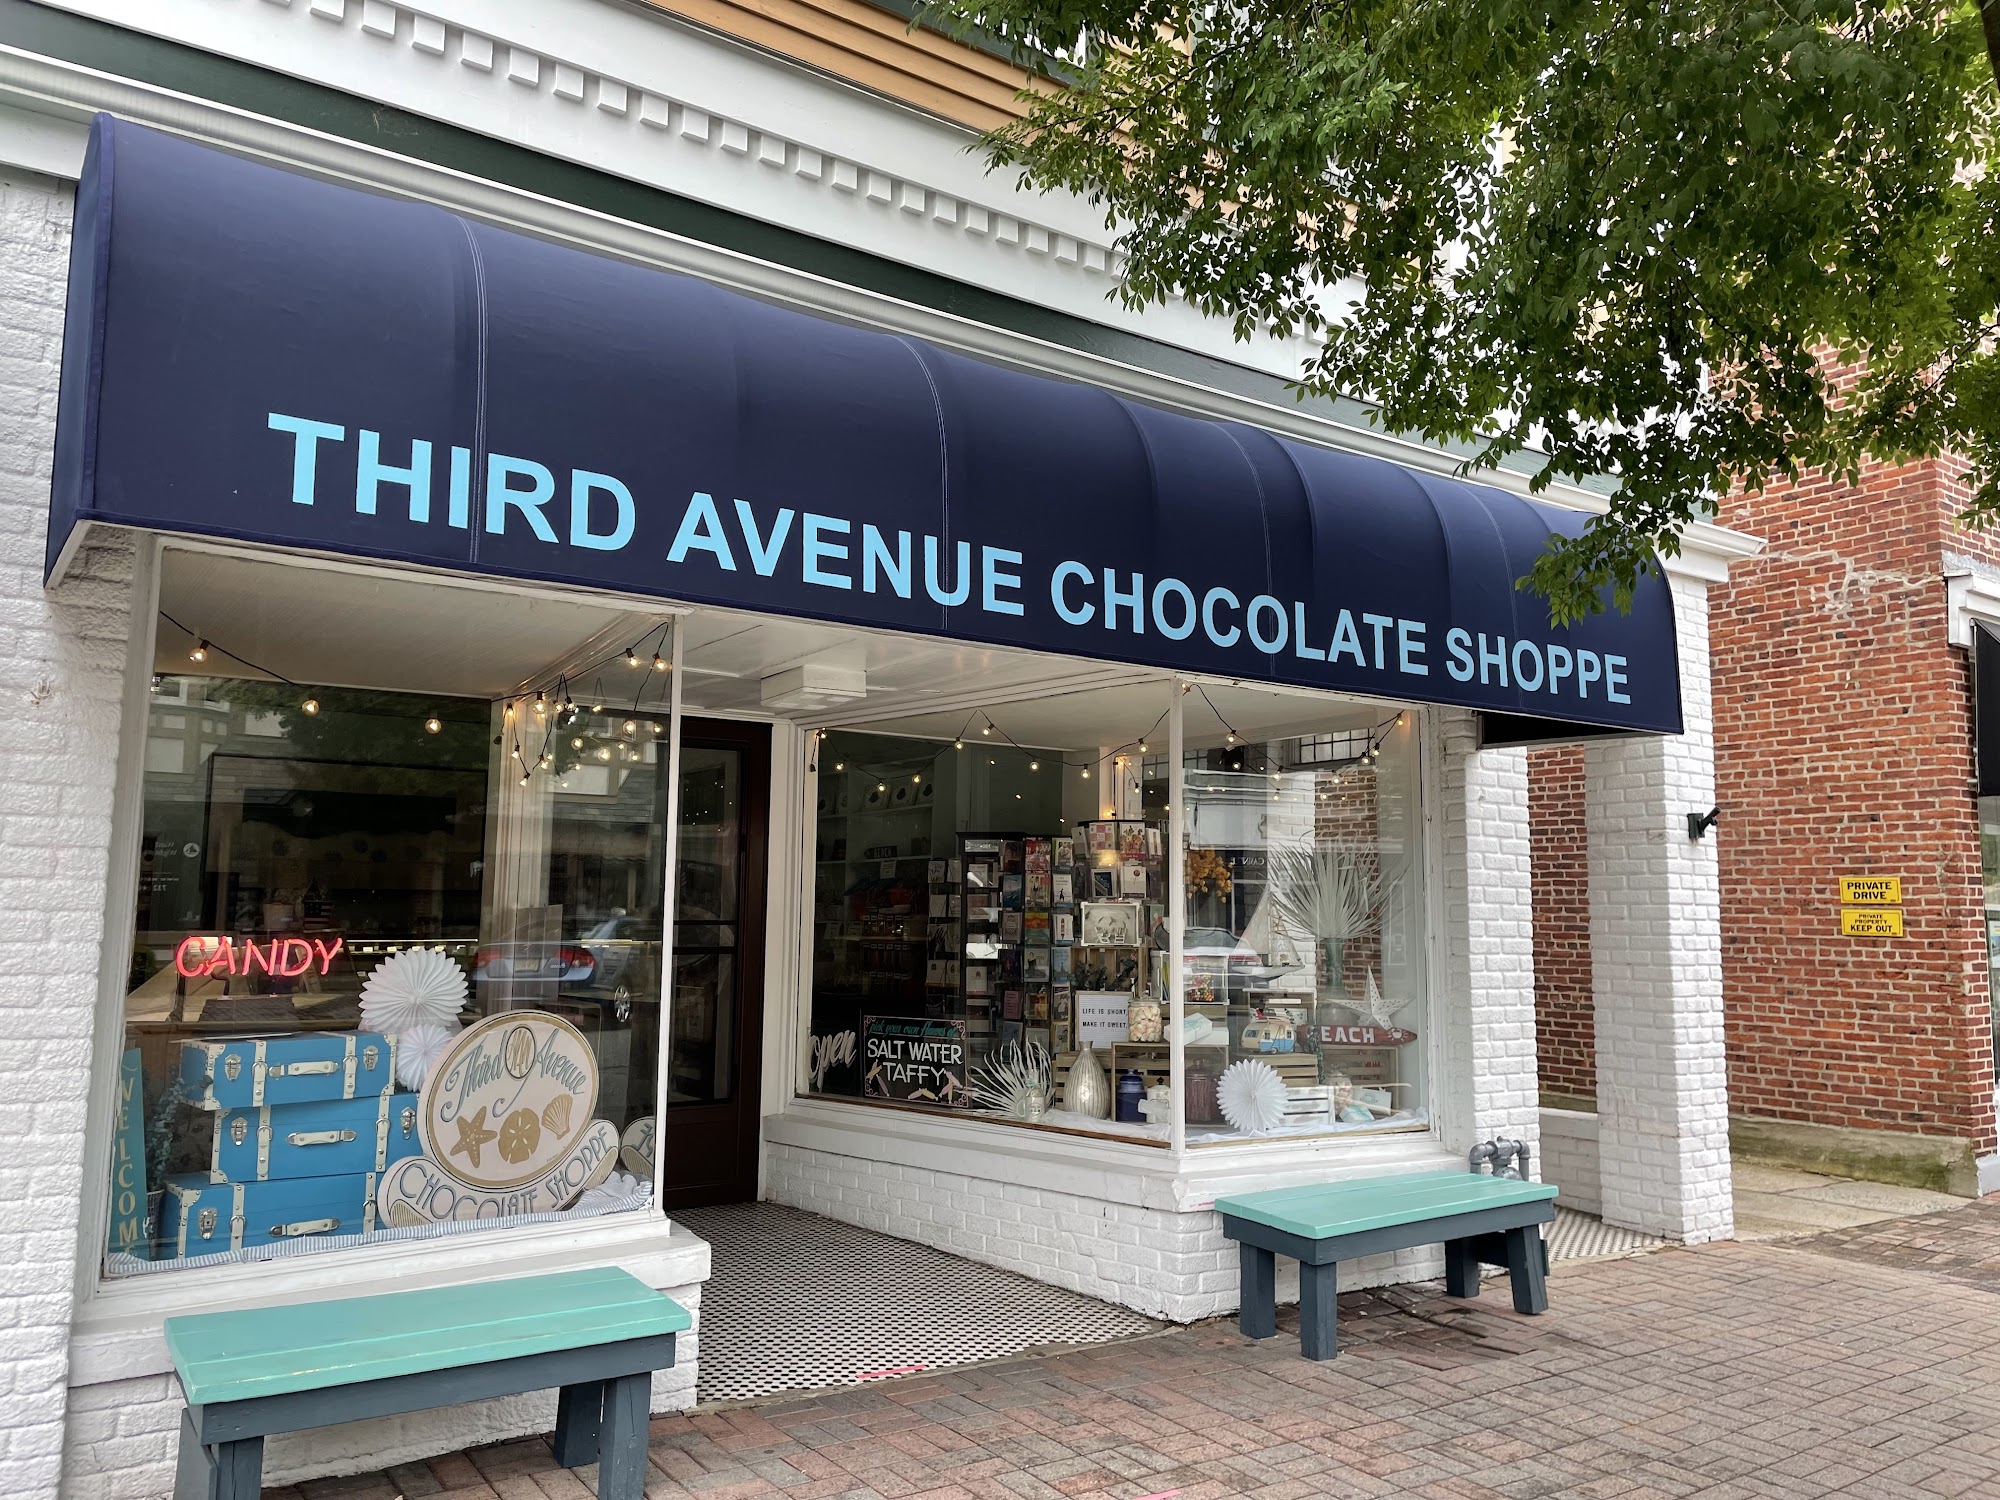 Third Avenue Chocolate Shoppe